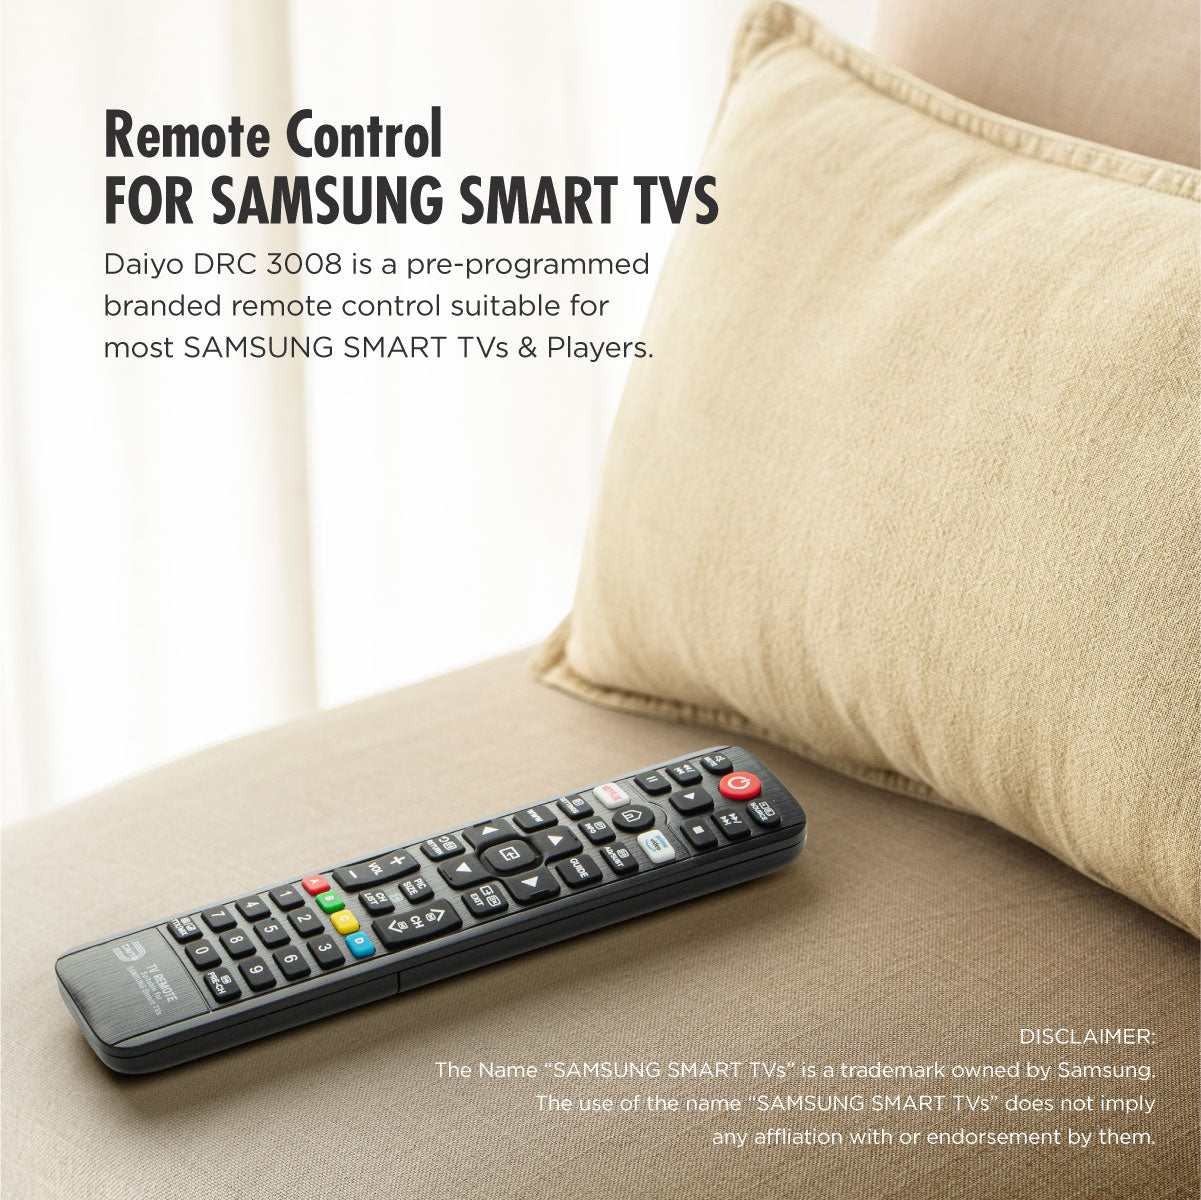 Daiyo DRC 3008 Remote Control for Samsung Smart TVs